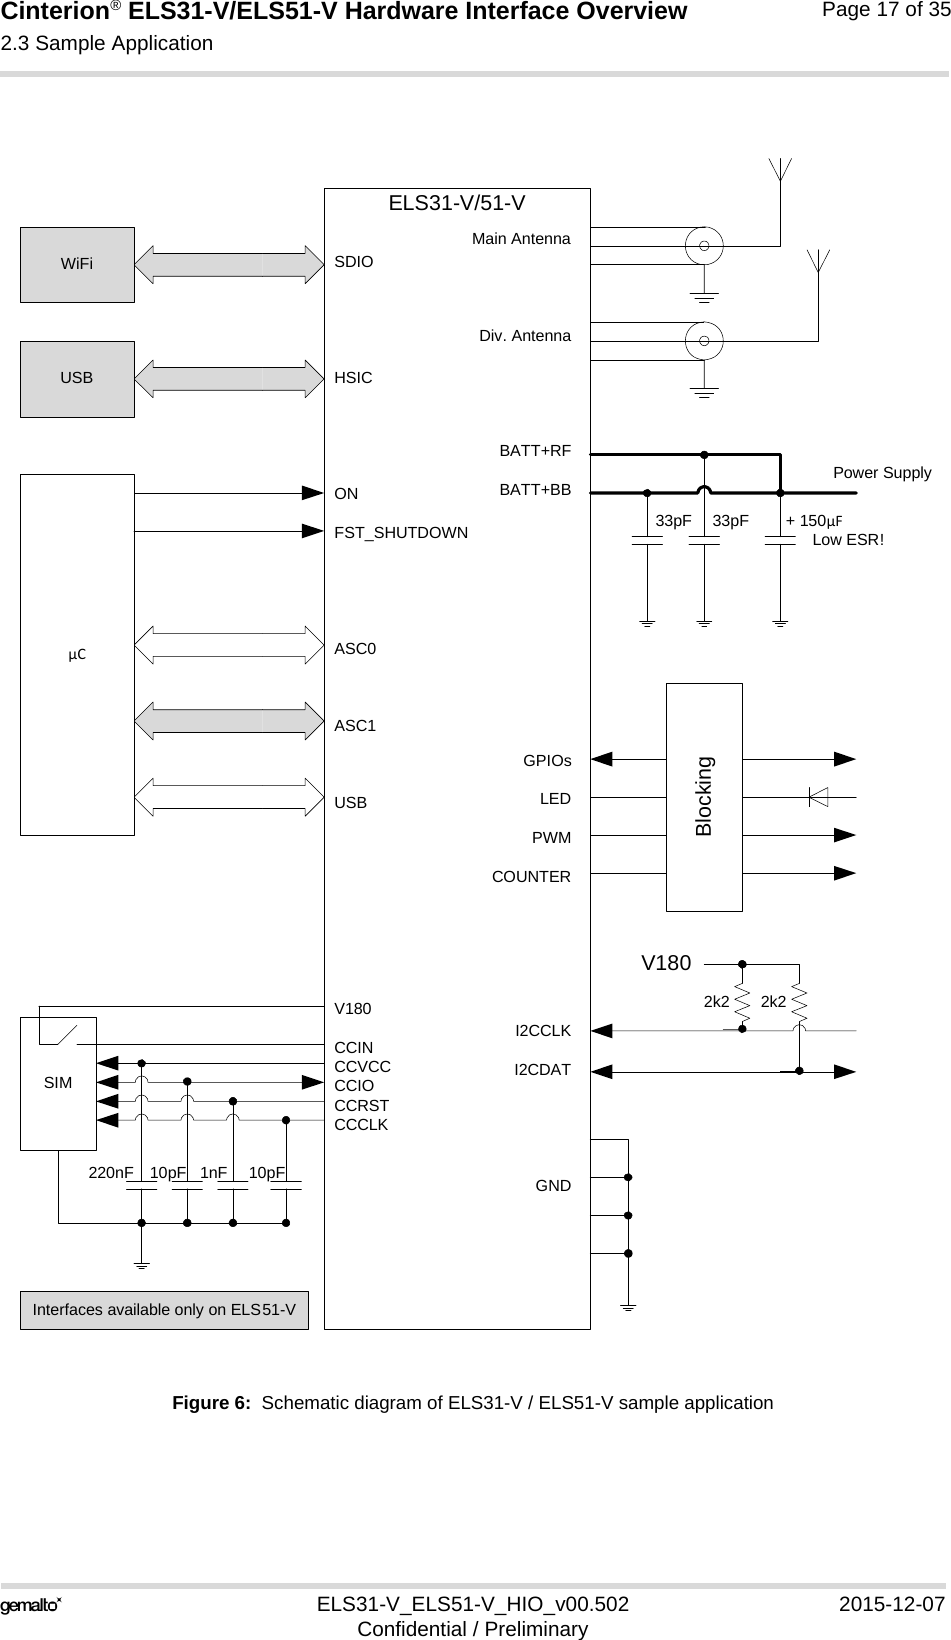 Cinterion® ELS31-V/ELS51-V Hardware Interface Overview2.3 Sample Application17ELS31-V_ELS51-V_HIO_v00.502 2015-12-07Confidential / PreliminaryPage 17 of 35Figure 6:  Schematic diagram of ELS31-V / ELS51-V sample applicationELS31-V/51-VMain AntennaDiv. AntennaBATT+RFBATT+BBGPIOsLEDPWMCOUNTERI2CCLKI2CDATGNDSDIOHSICONFST_SHUTDOWNASC0ASC1USBV180CCINCCVCCCCIOCCRSTCCCLKPower Supply33pF 33pF + 150µFLow ESR!2k2 2k2V180BlockingWiFiµC1nF 10pF10pF220nFSIMUSBInterfaces available only on ELS51-V